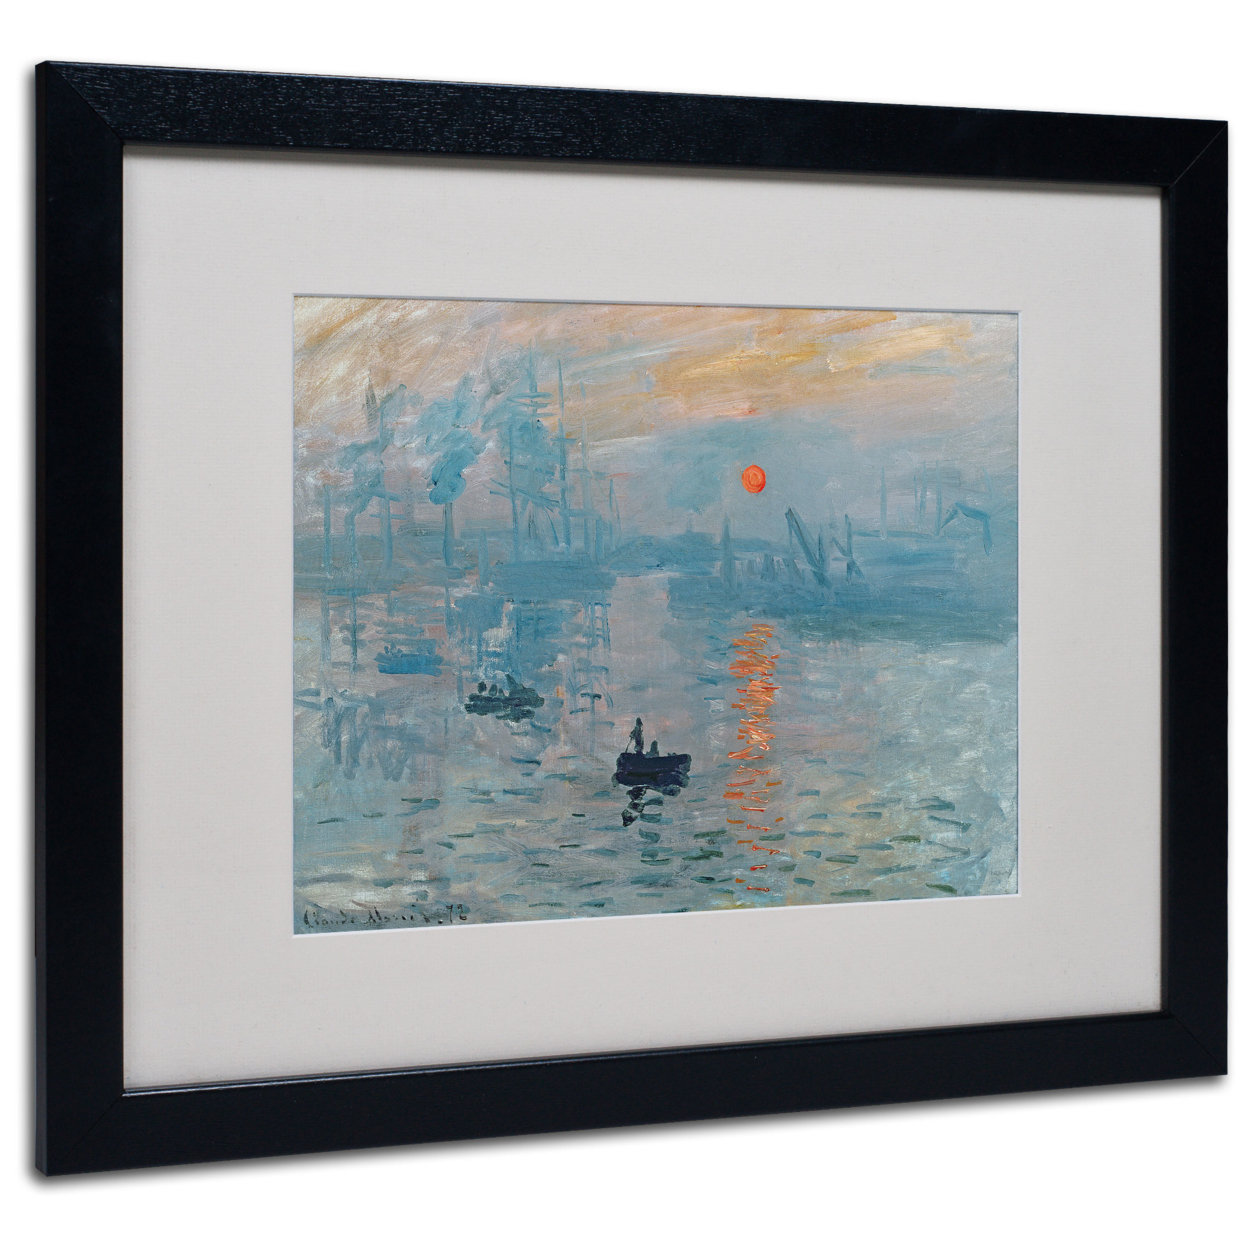 Claude Monet 'Impression Sunrise' Black Wooden Framed Art 18 X 22 Inches